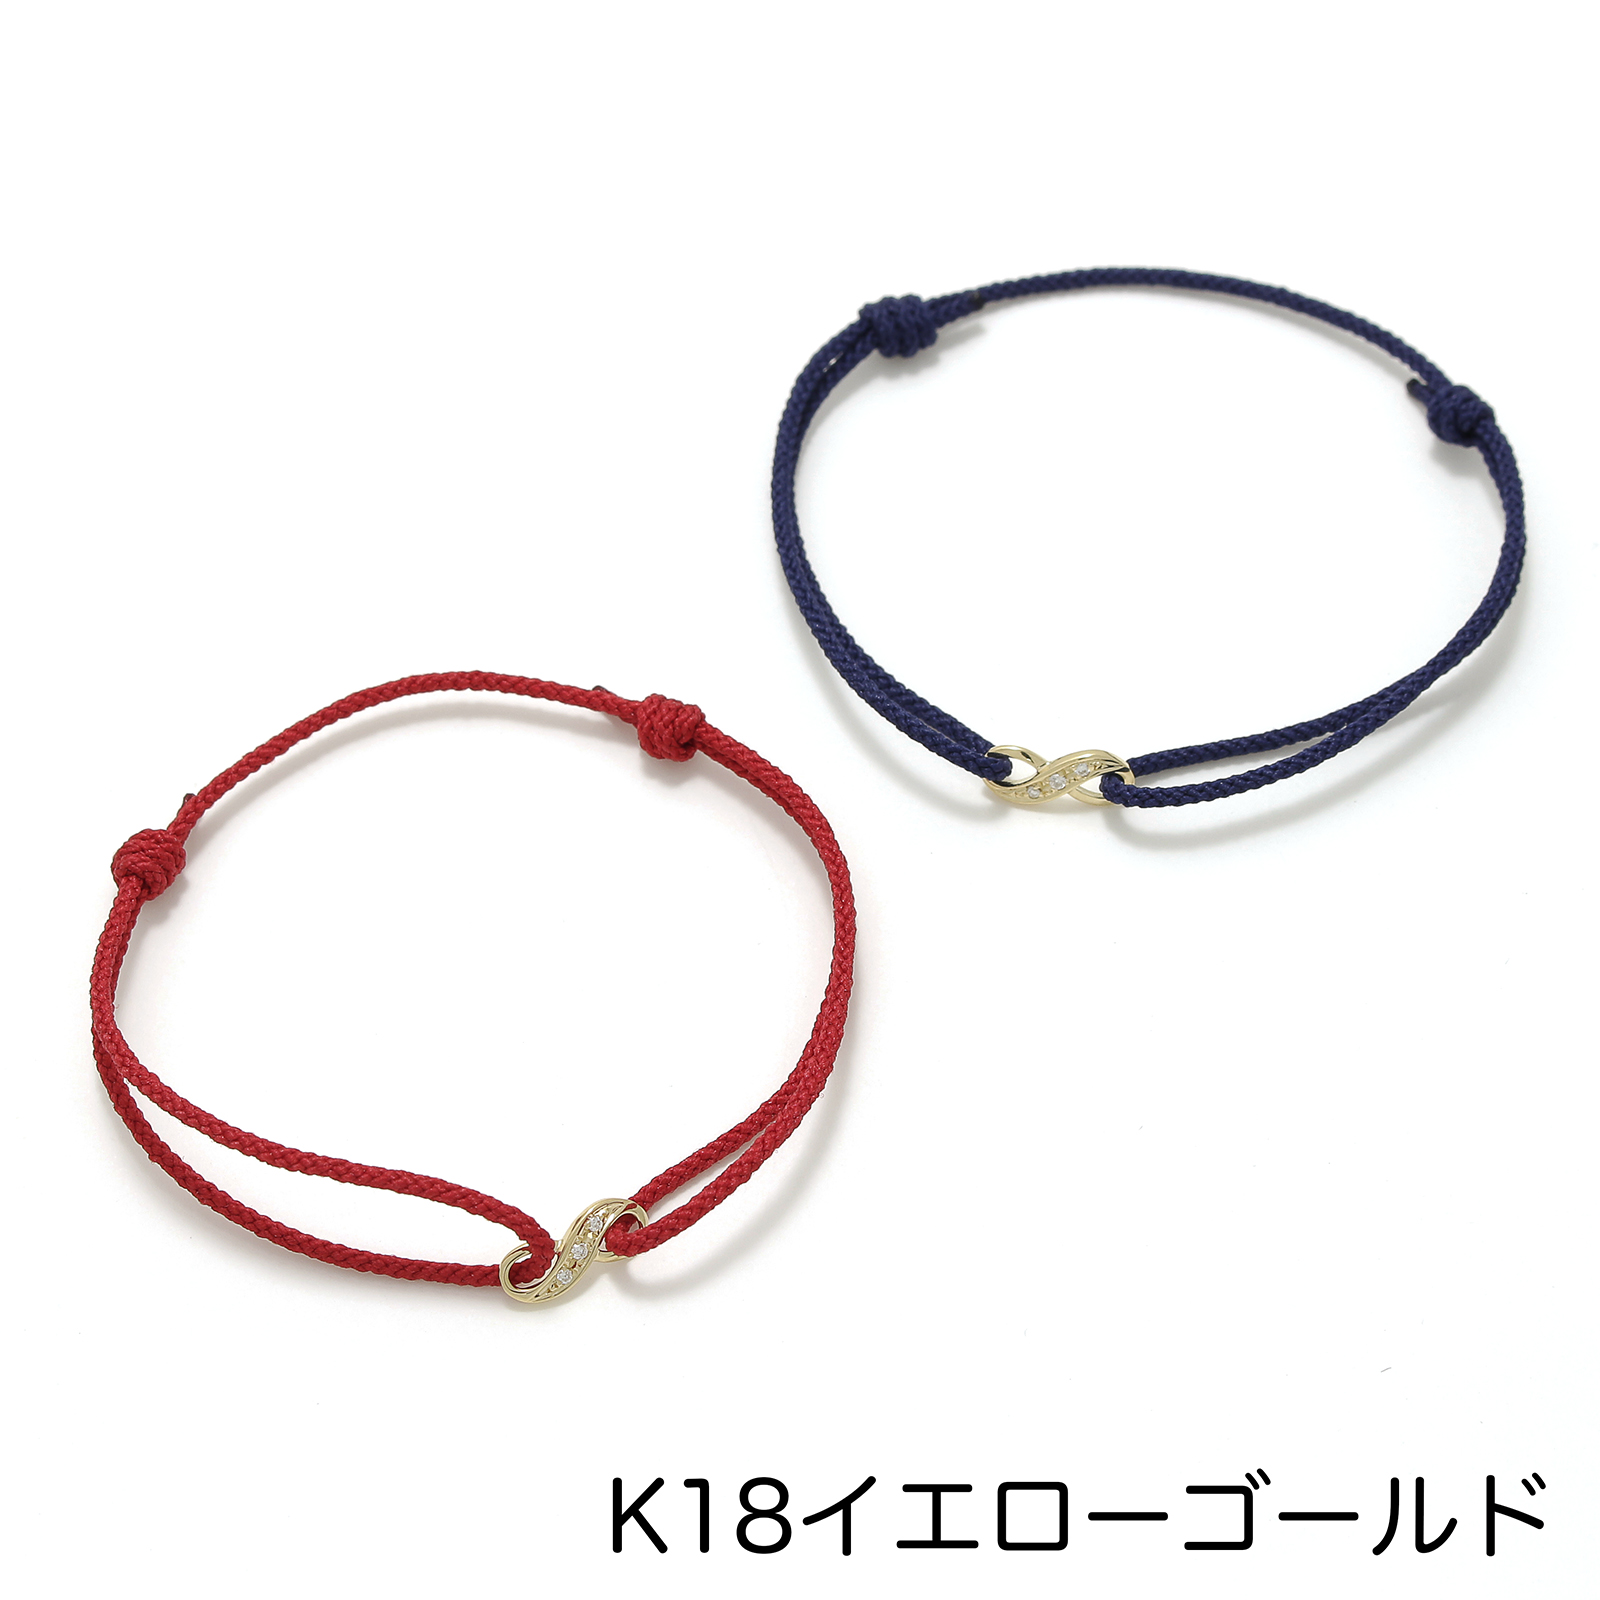 Infinity HOPE Cord Bracelet w/Diamond